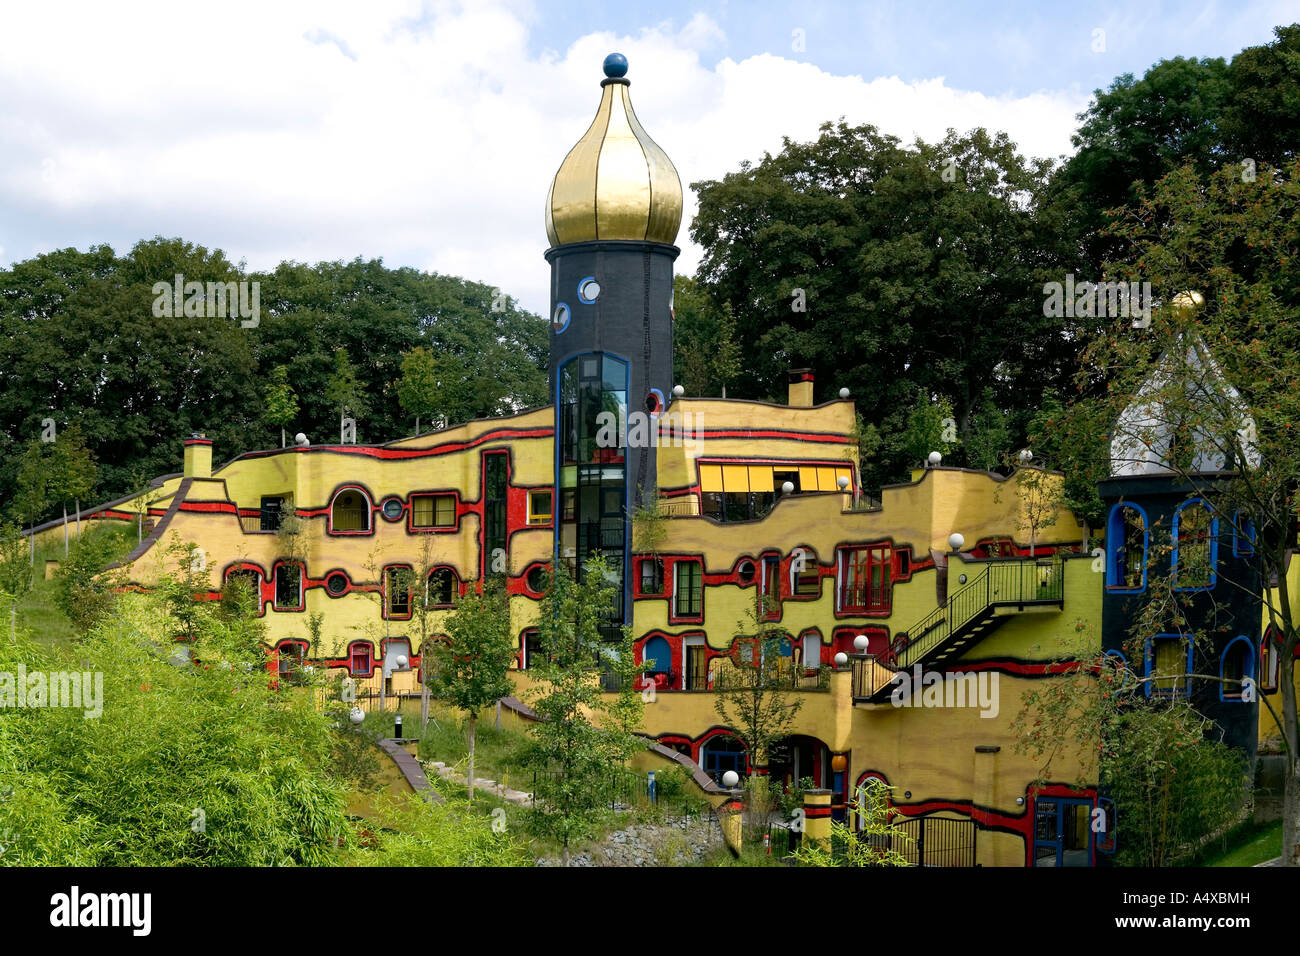 Hundertwasser house at Grugapark, Essen, NRW, Germany Stock Photo